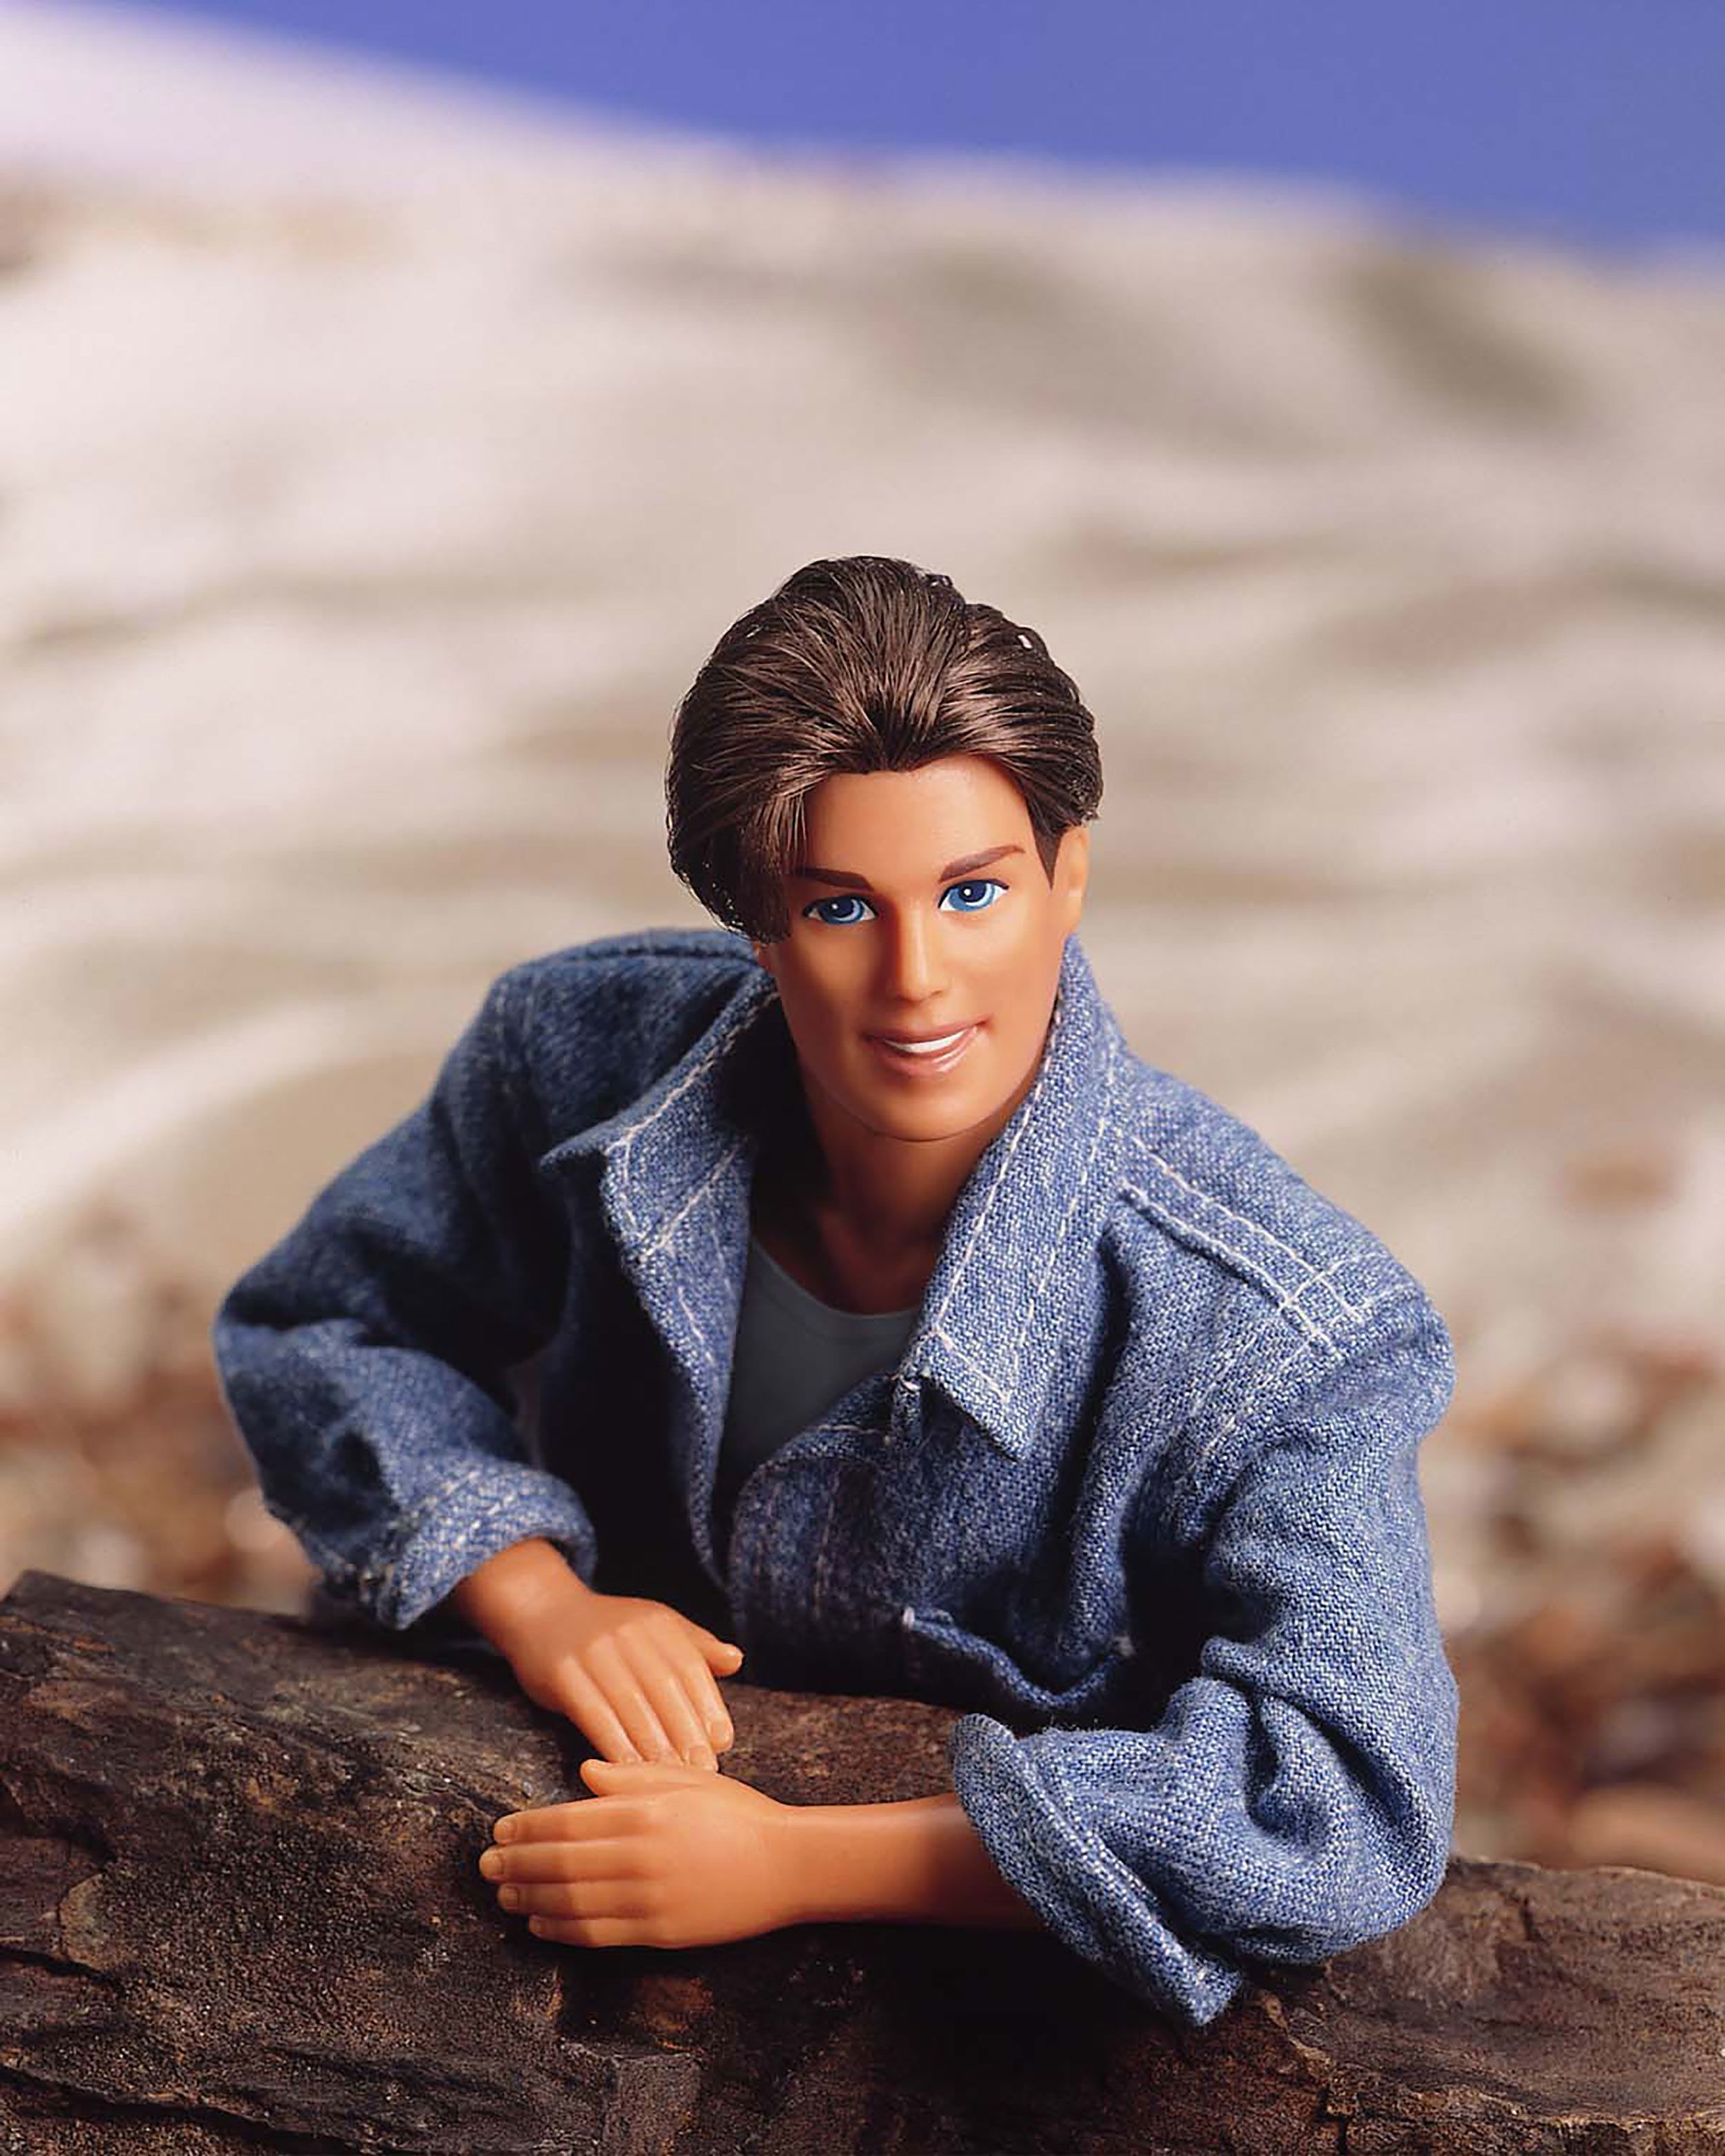 Barbie's Creator Wanted Ken to Have Bigger 'Bulge' but Mattel Refused